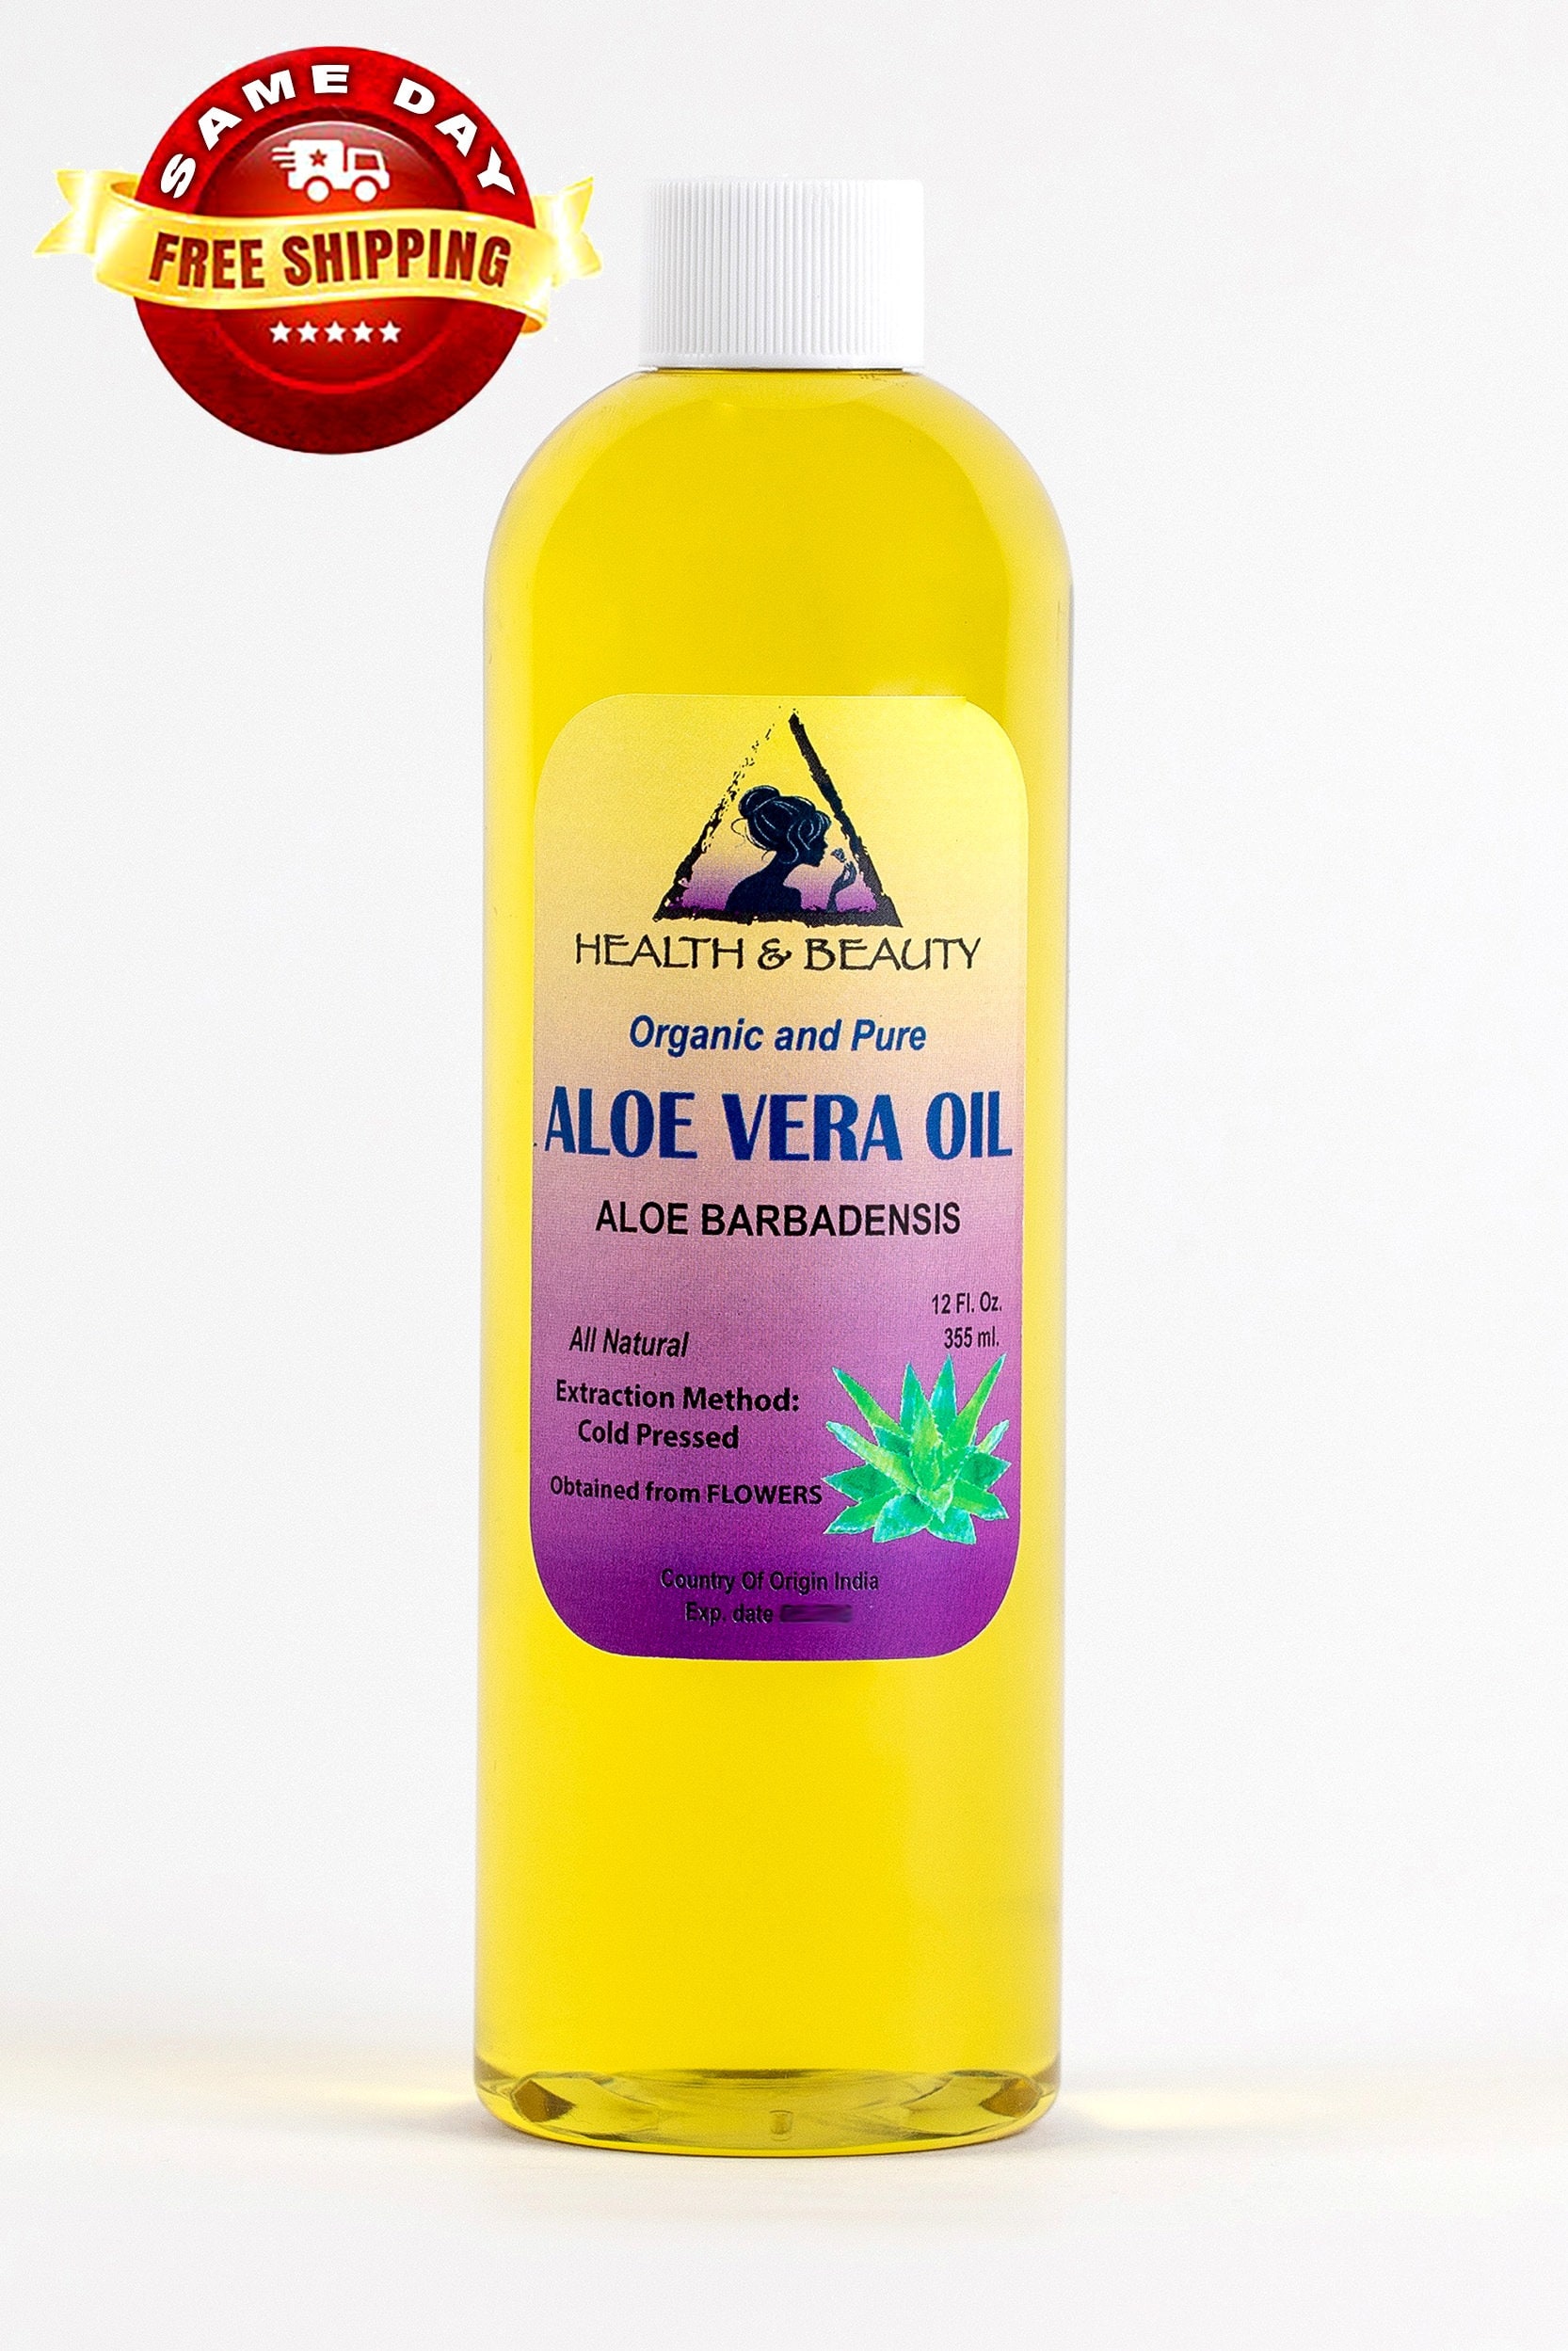 25 lb Aloe Vera Clear Glycerin Melt & Soap Base Organic Natural